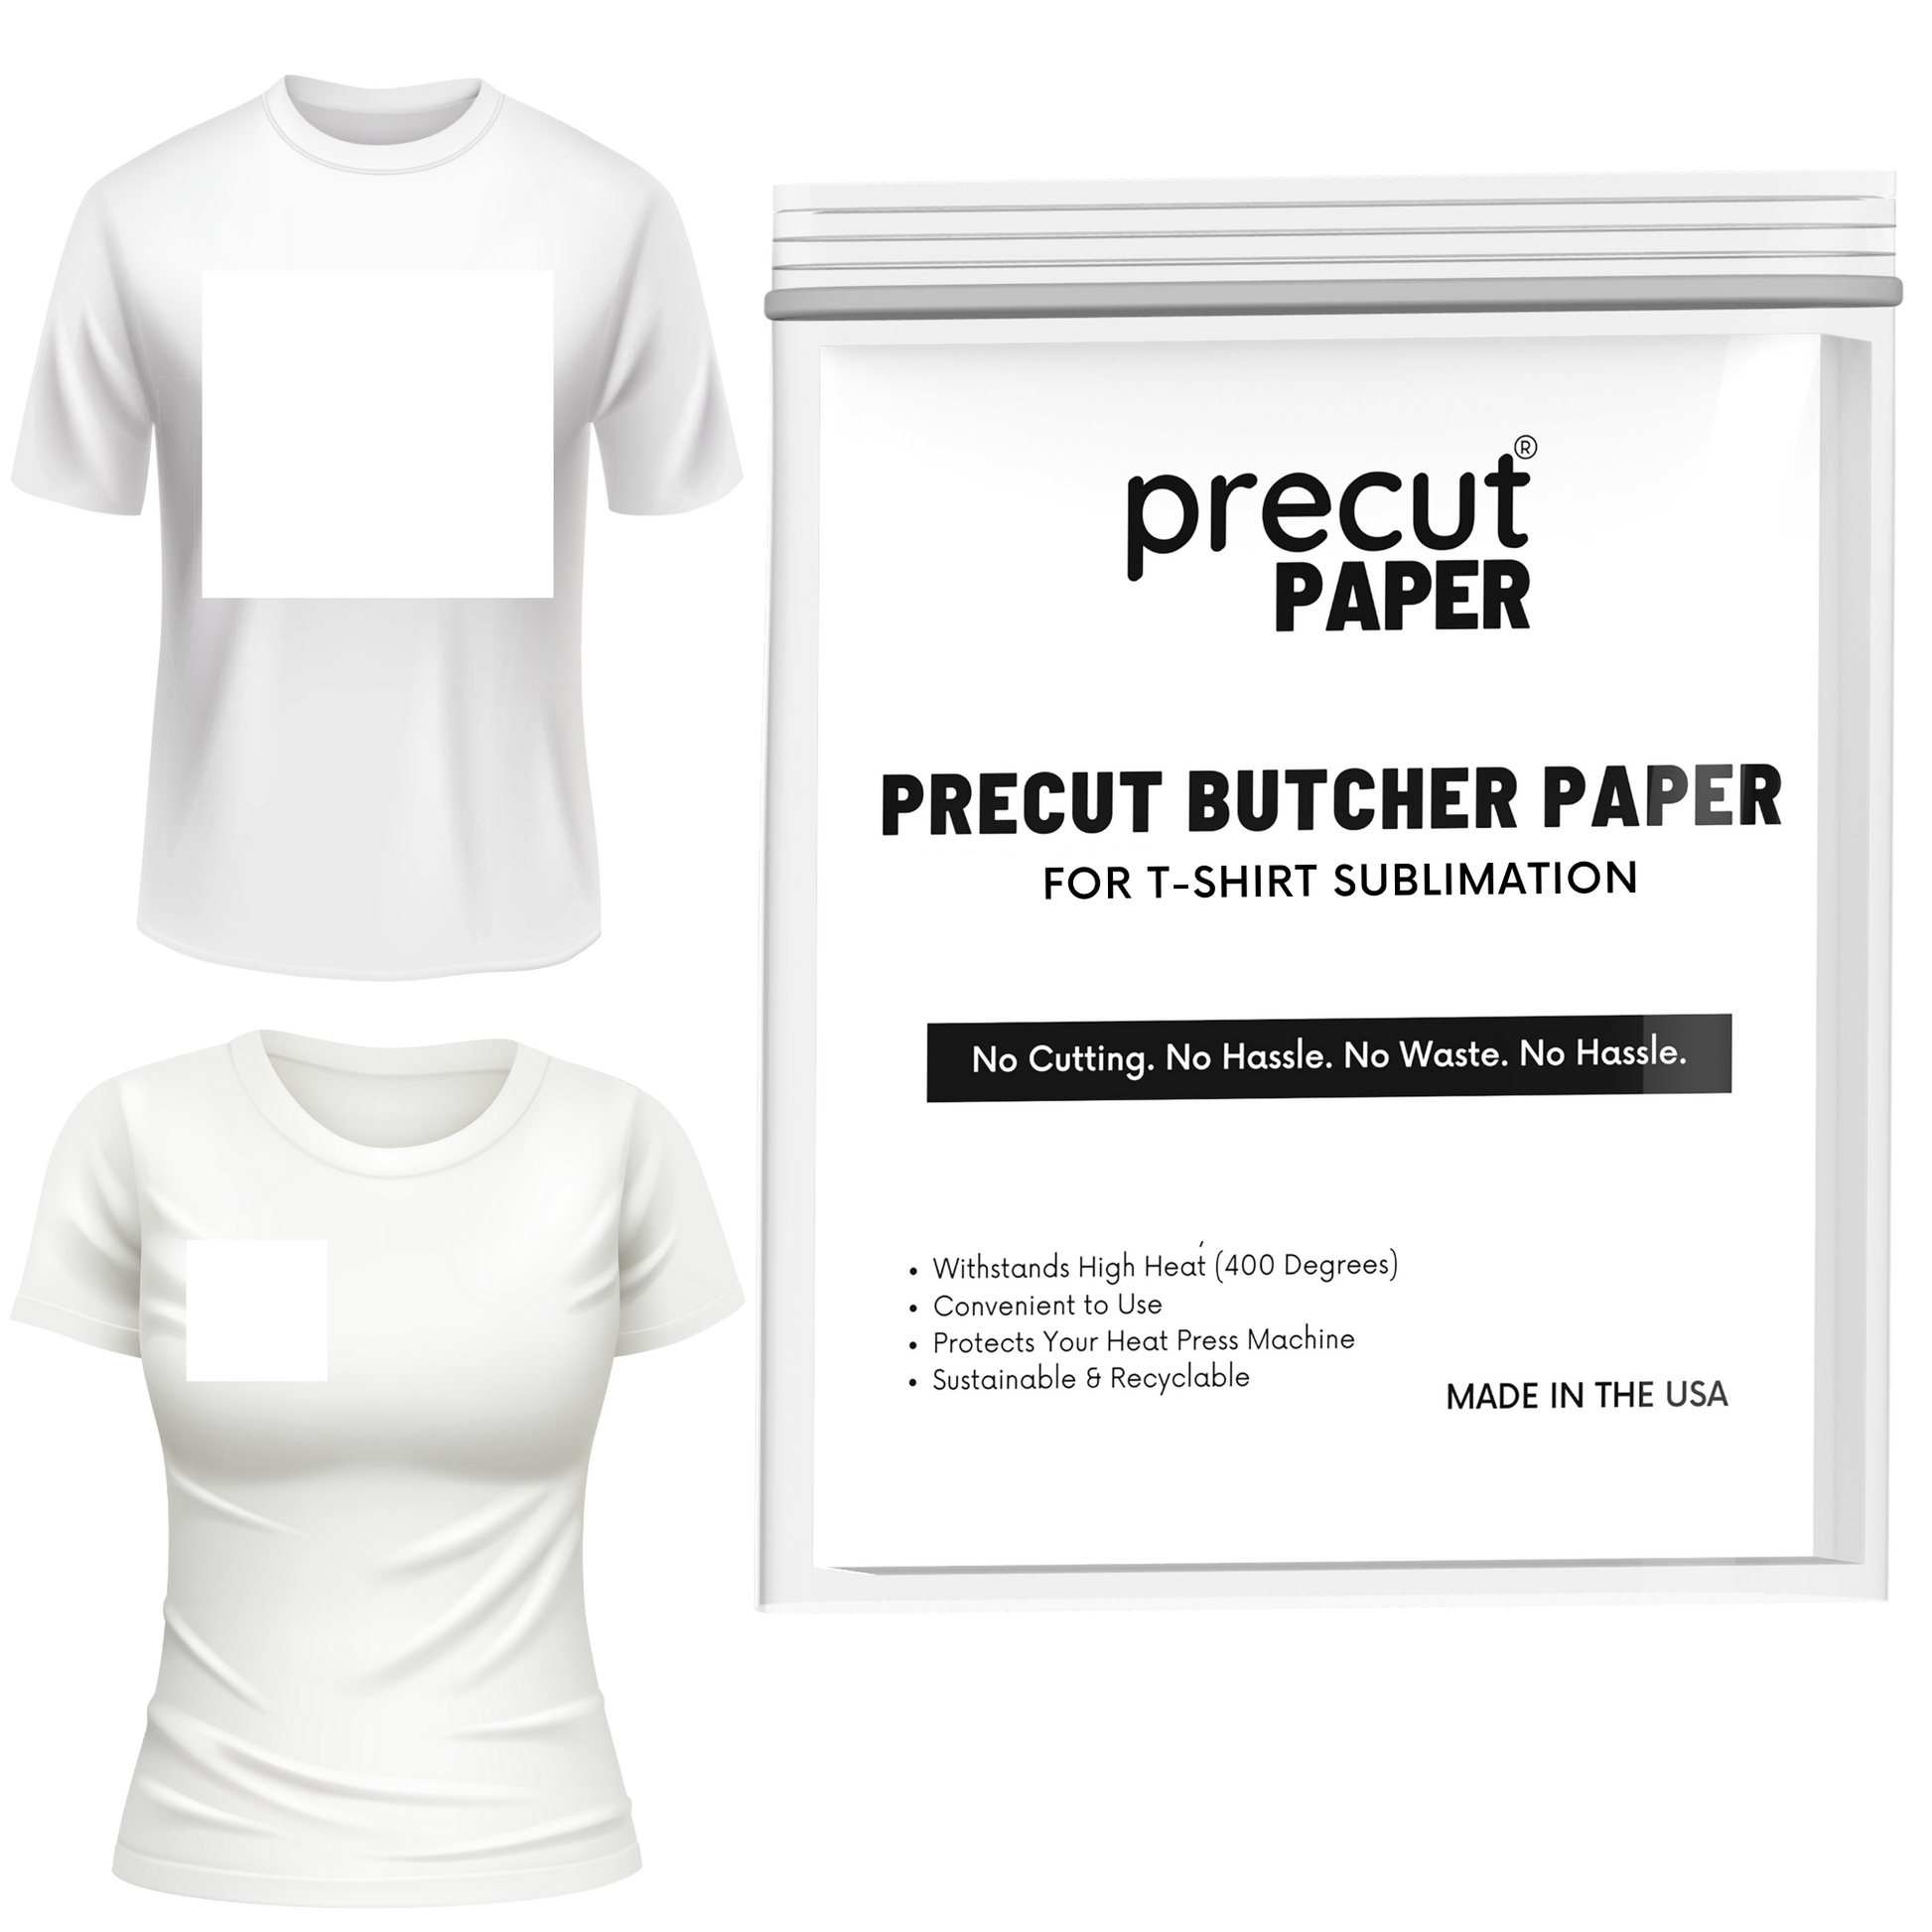 Precut Butcher Paper for Sublimation, Mug Press, Heat Press Crafts, No  Cutting, No Trimming, No Waste, No Hassle several Sizes 